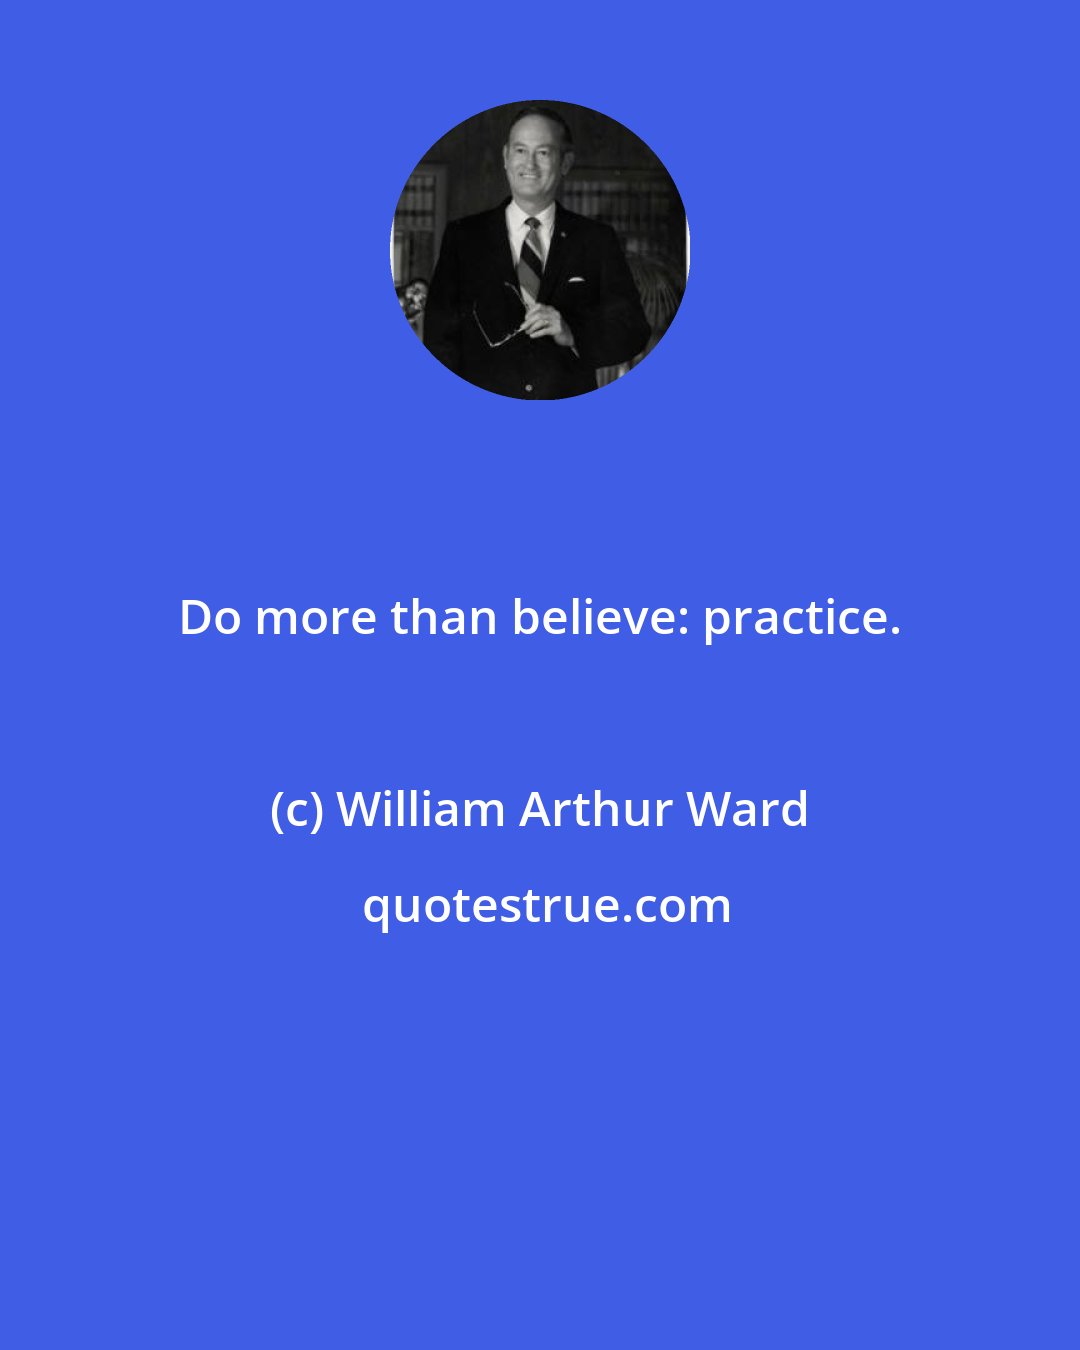 William Arthur Ward: Do more than believe: practice.